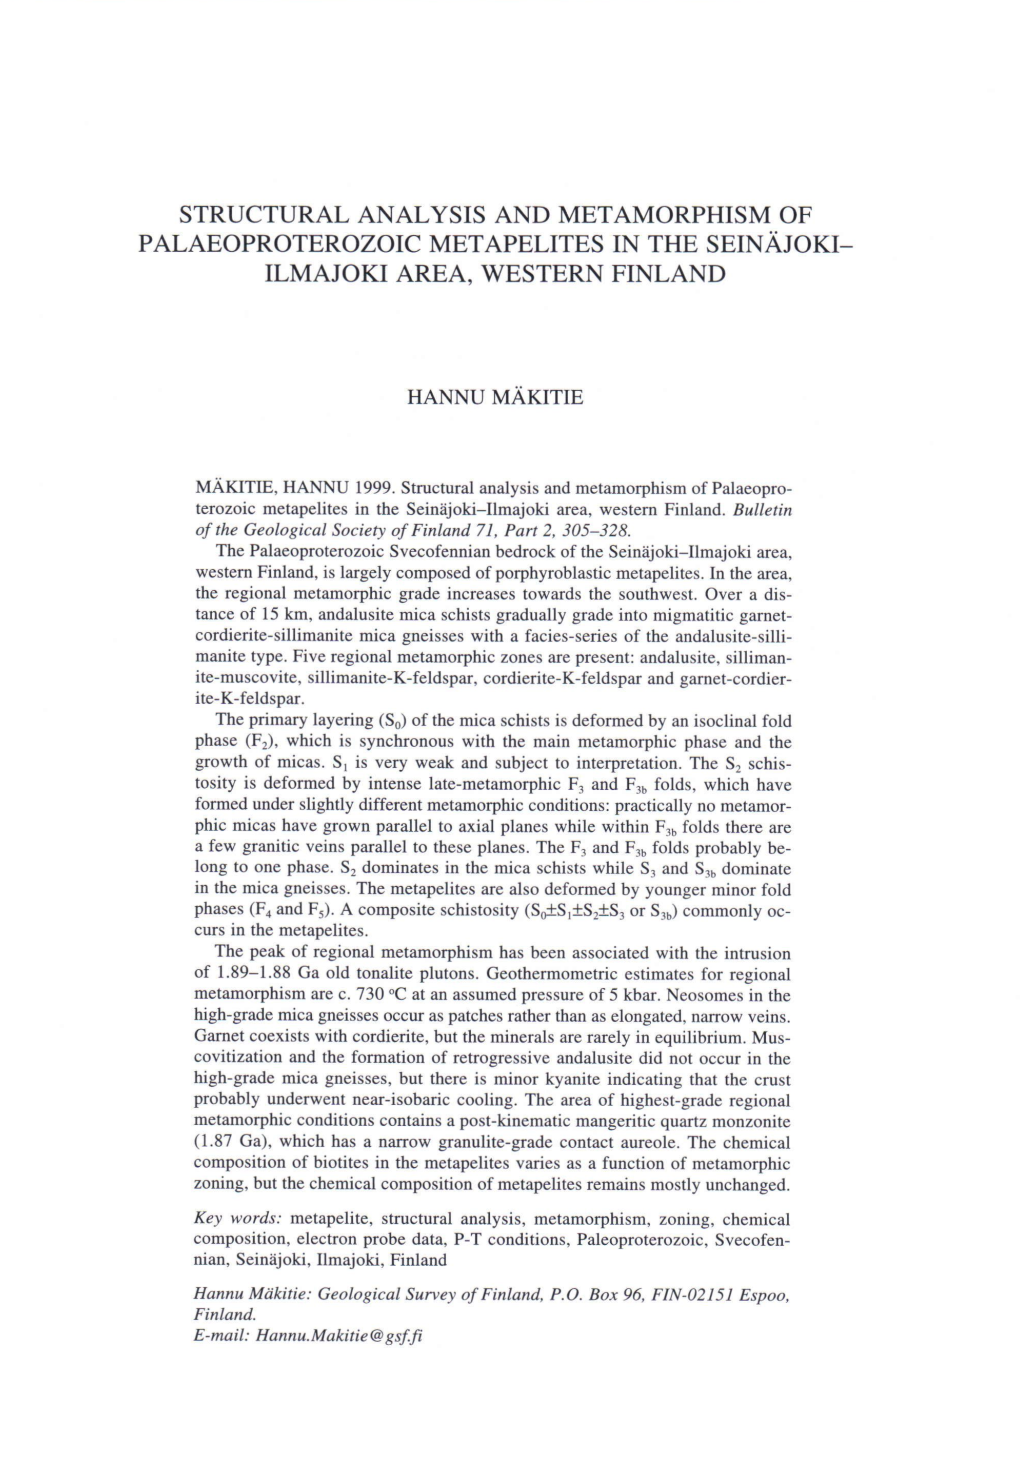 Structural Analysis and Metamorphism of Palaeoproterozoic Metapelites in the Seinäjoki- Ilmajoki Area, Western Finland